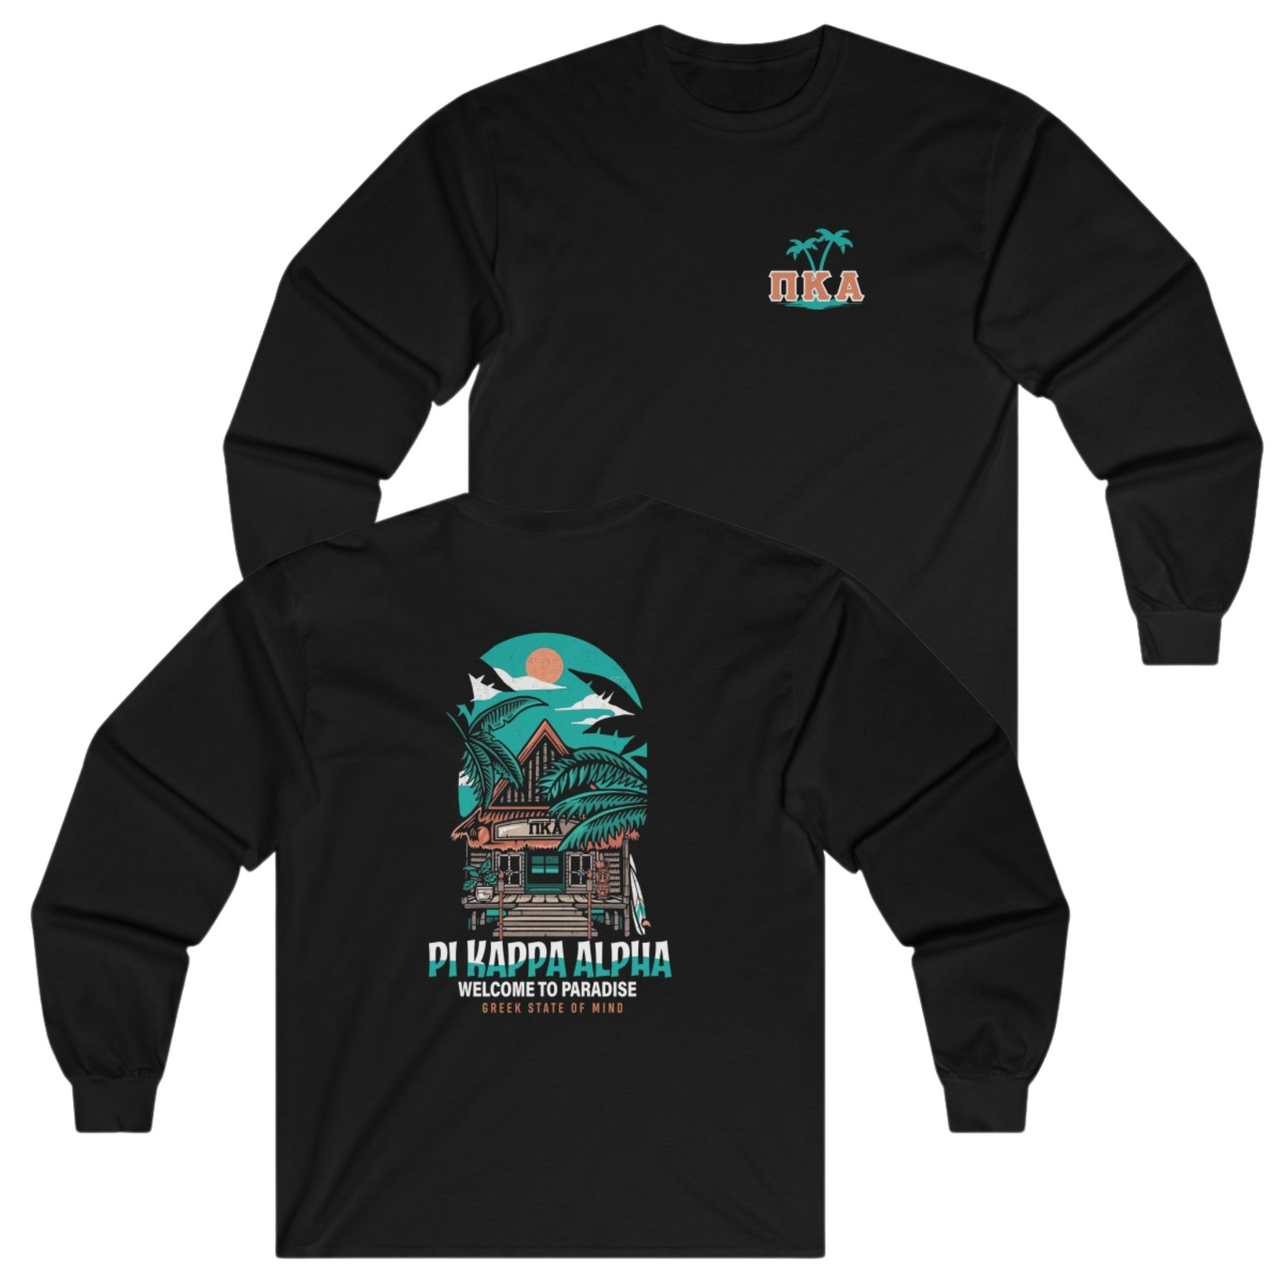 Black Pi Kappa Alpha Graphic Long Sleeve T-Shirt | Welcome to Paradise | Pi kappa alpha fraternity shirt 